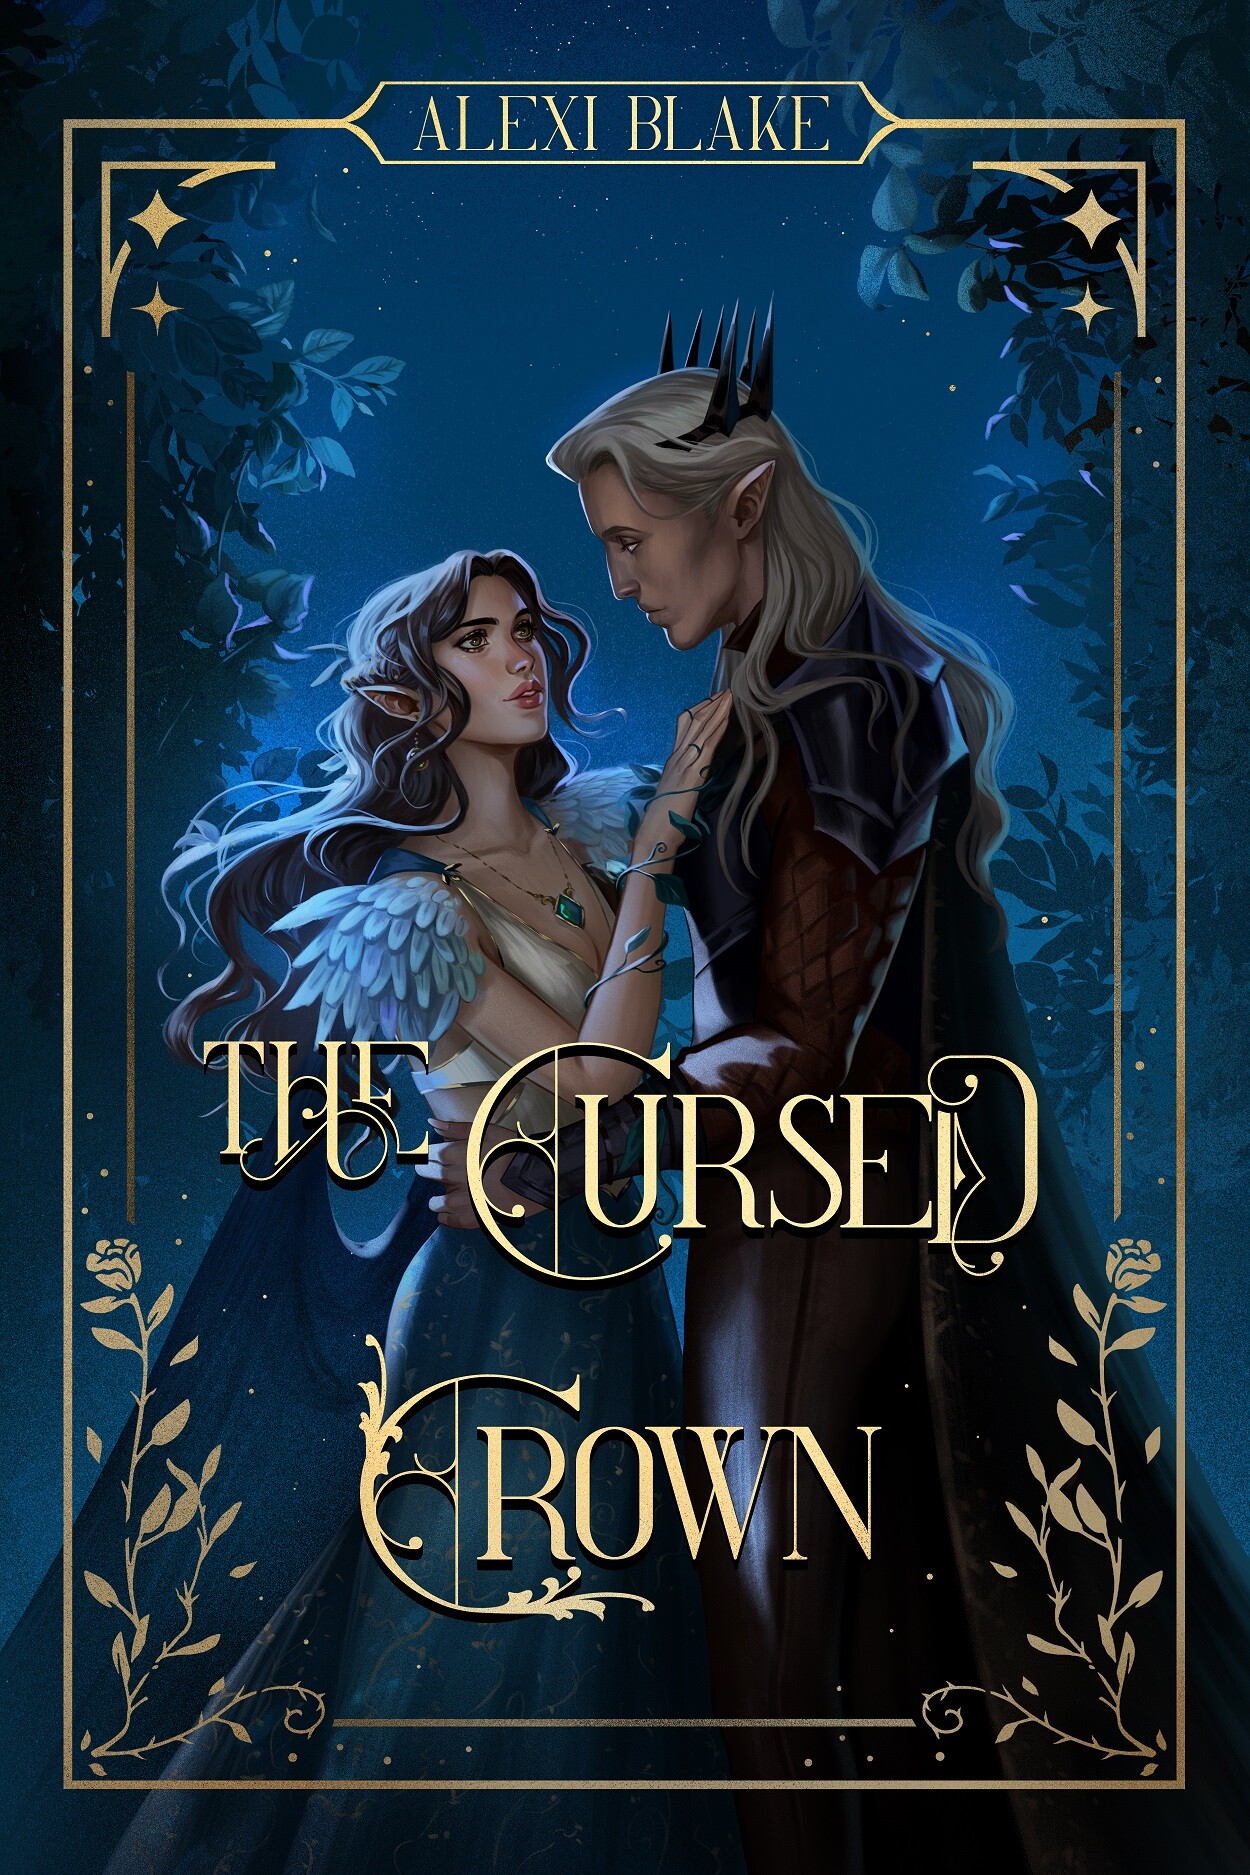 Cursed Crowns – Books of Wonder